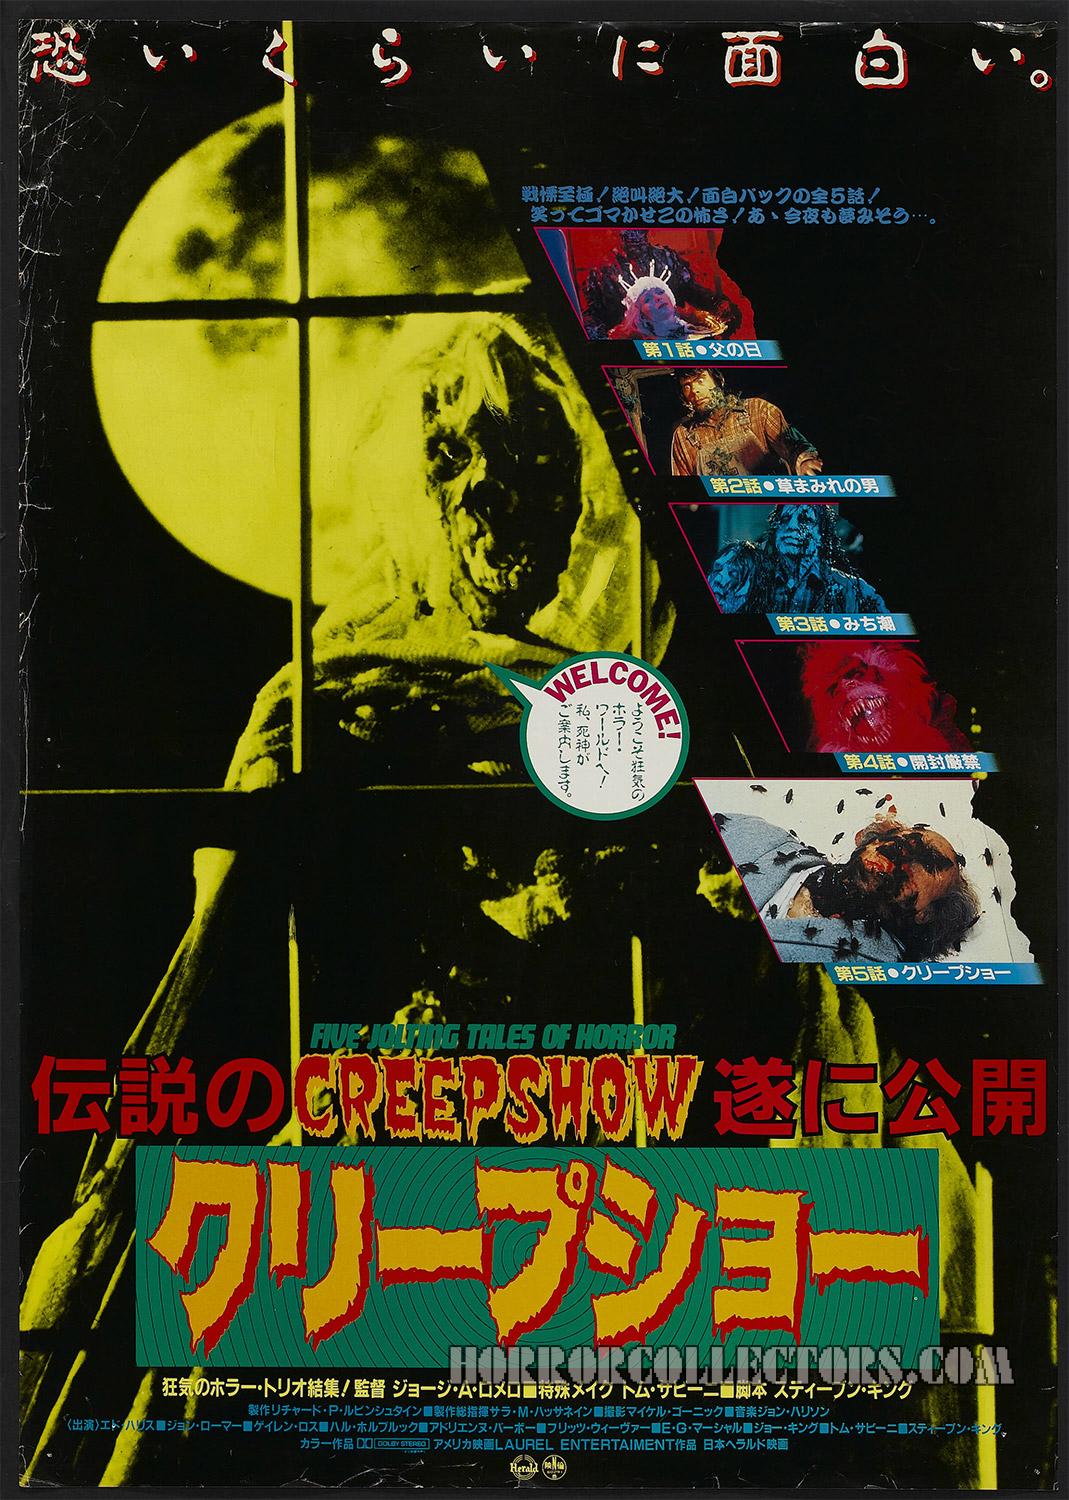 Creepshow Japanese Hansai Poster